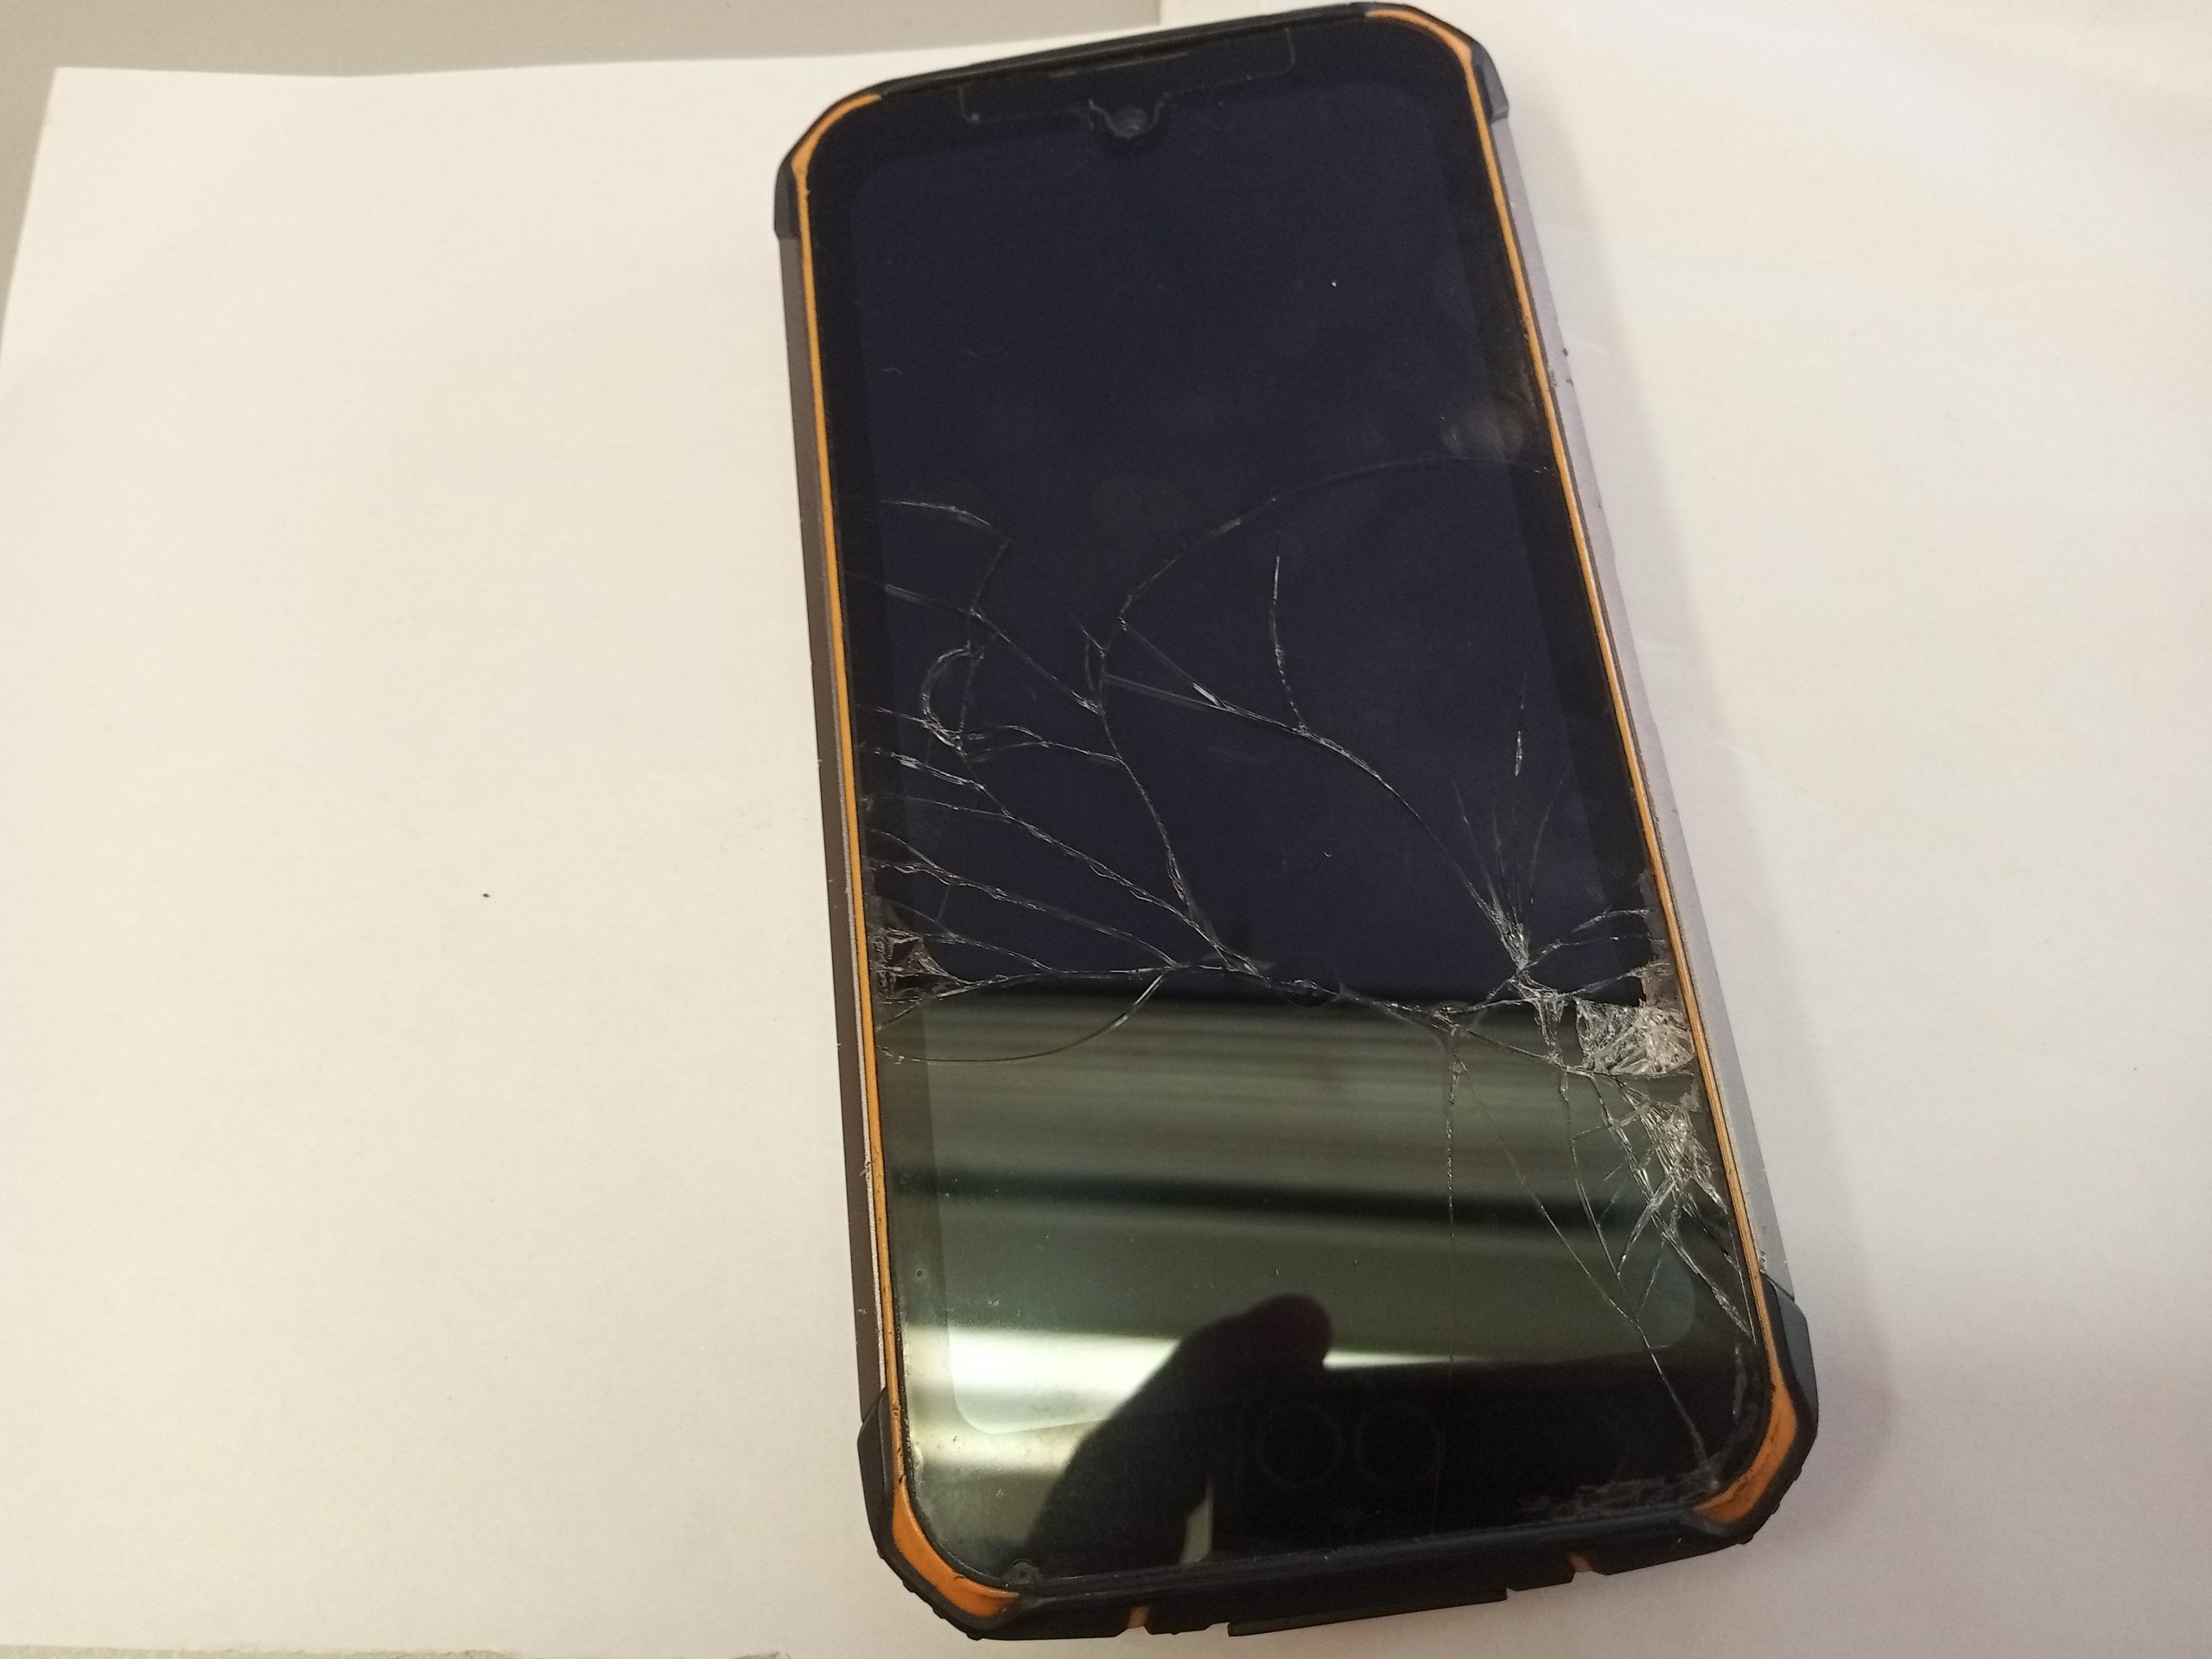  Китайский смартфон Doogee S68 замена разбитого экрана